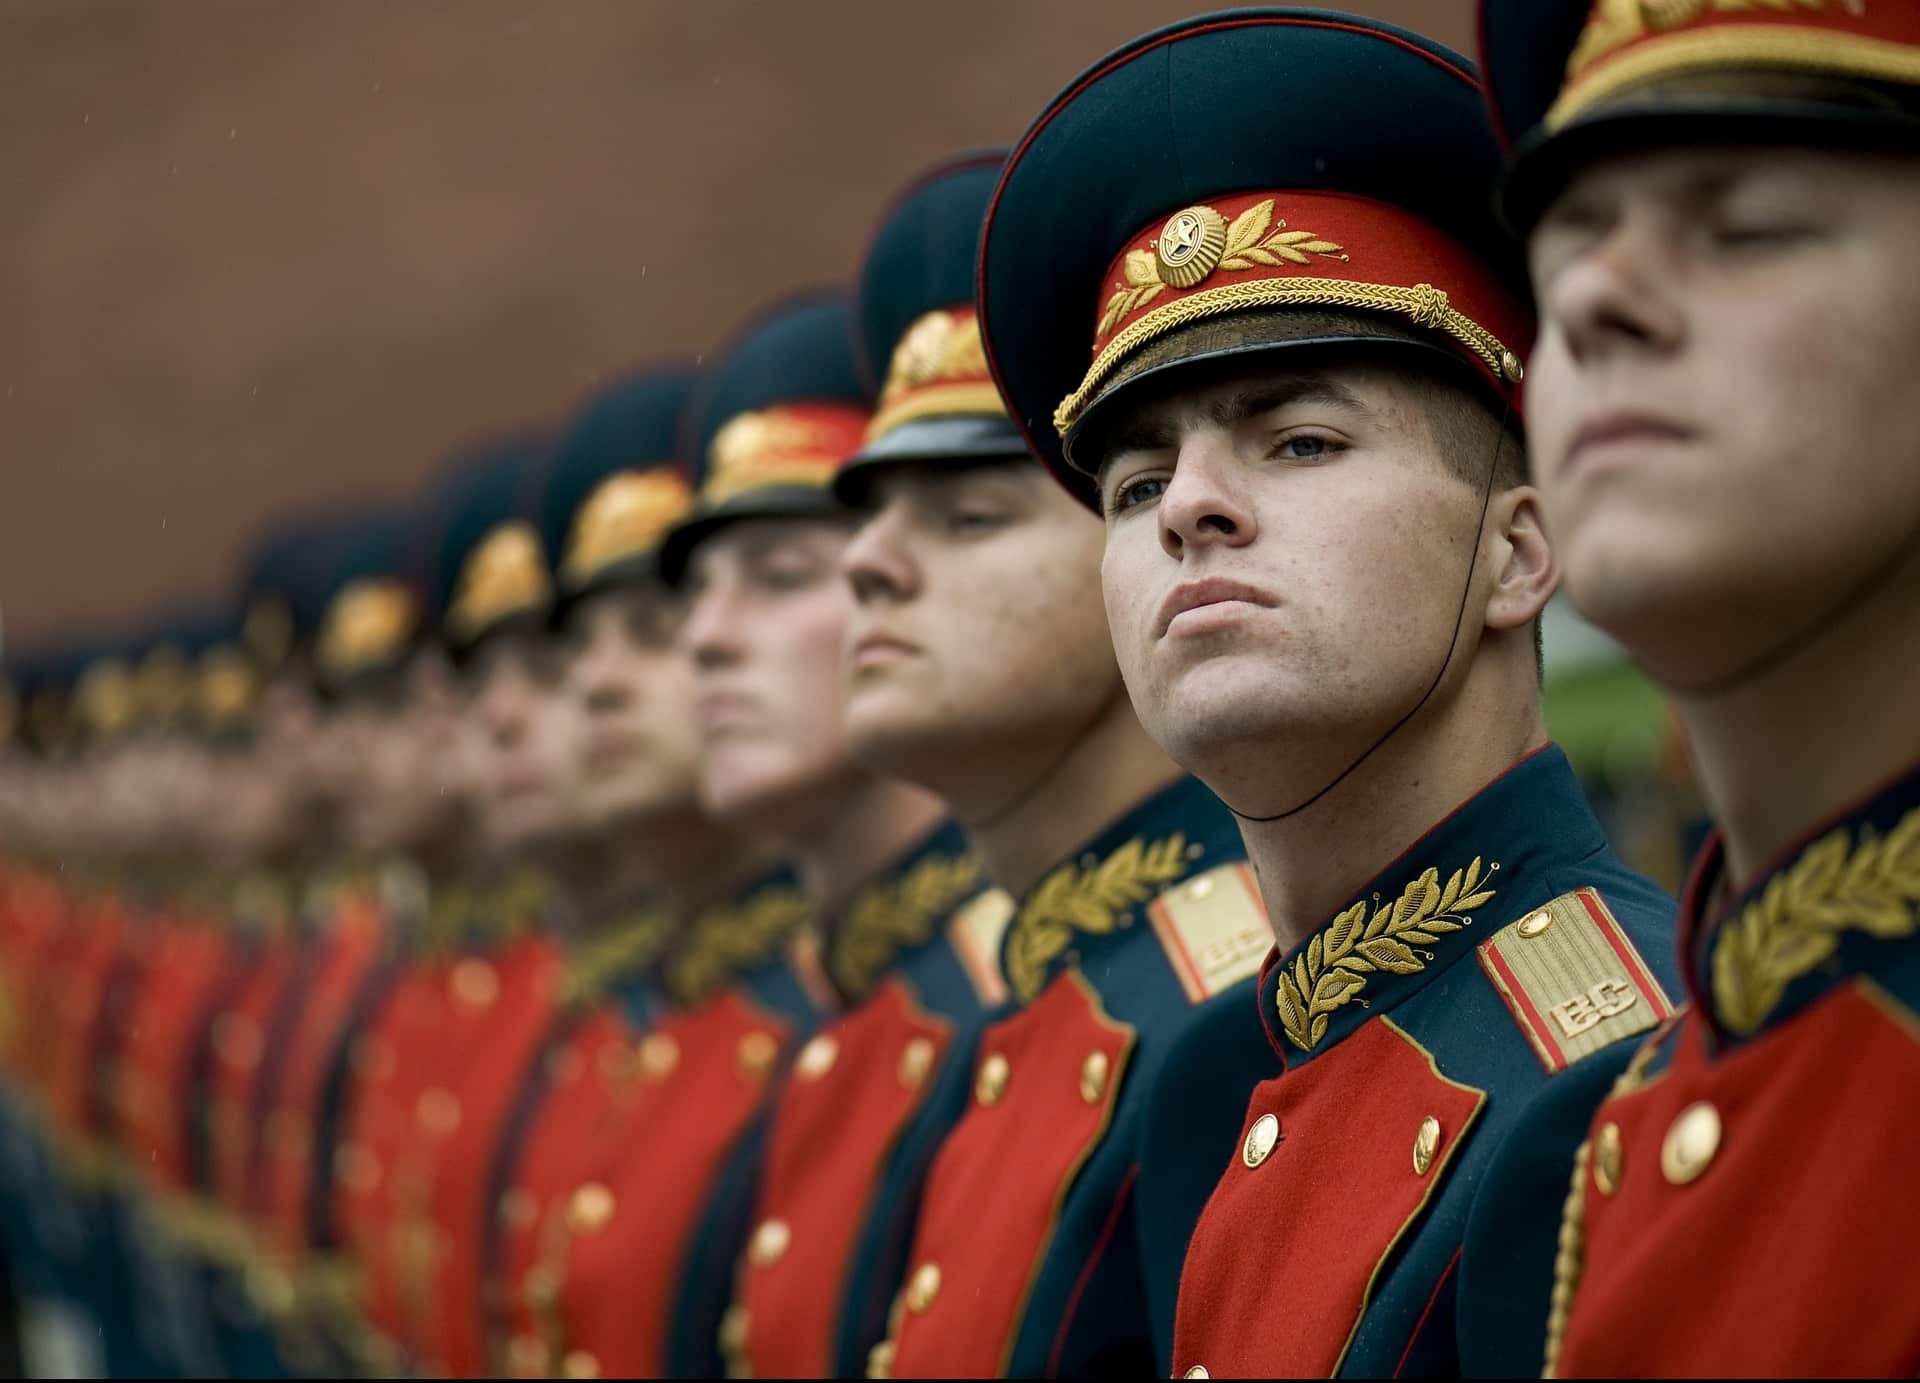 https://thebulletin.org/wp-content/uploads/2022/10/Russian-honor-guard-150x150.jpg